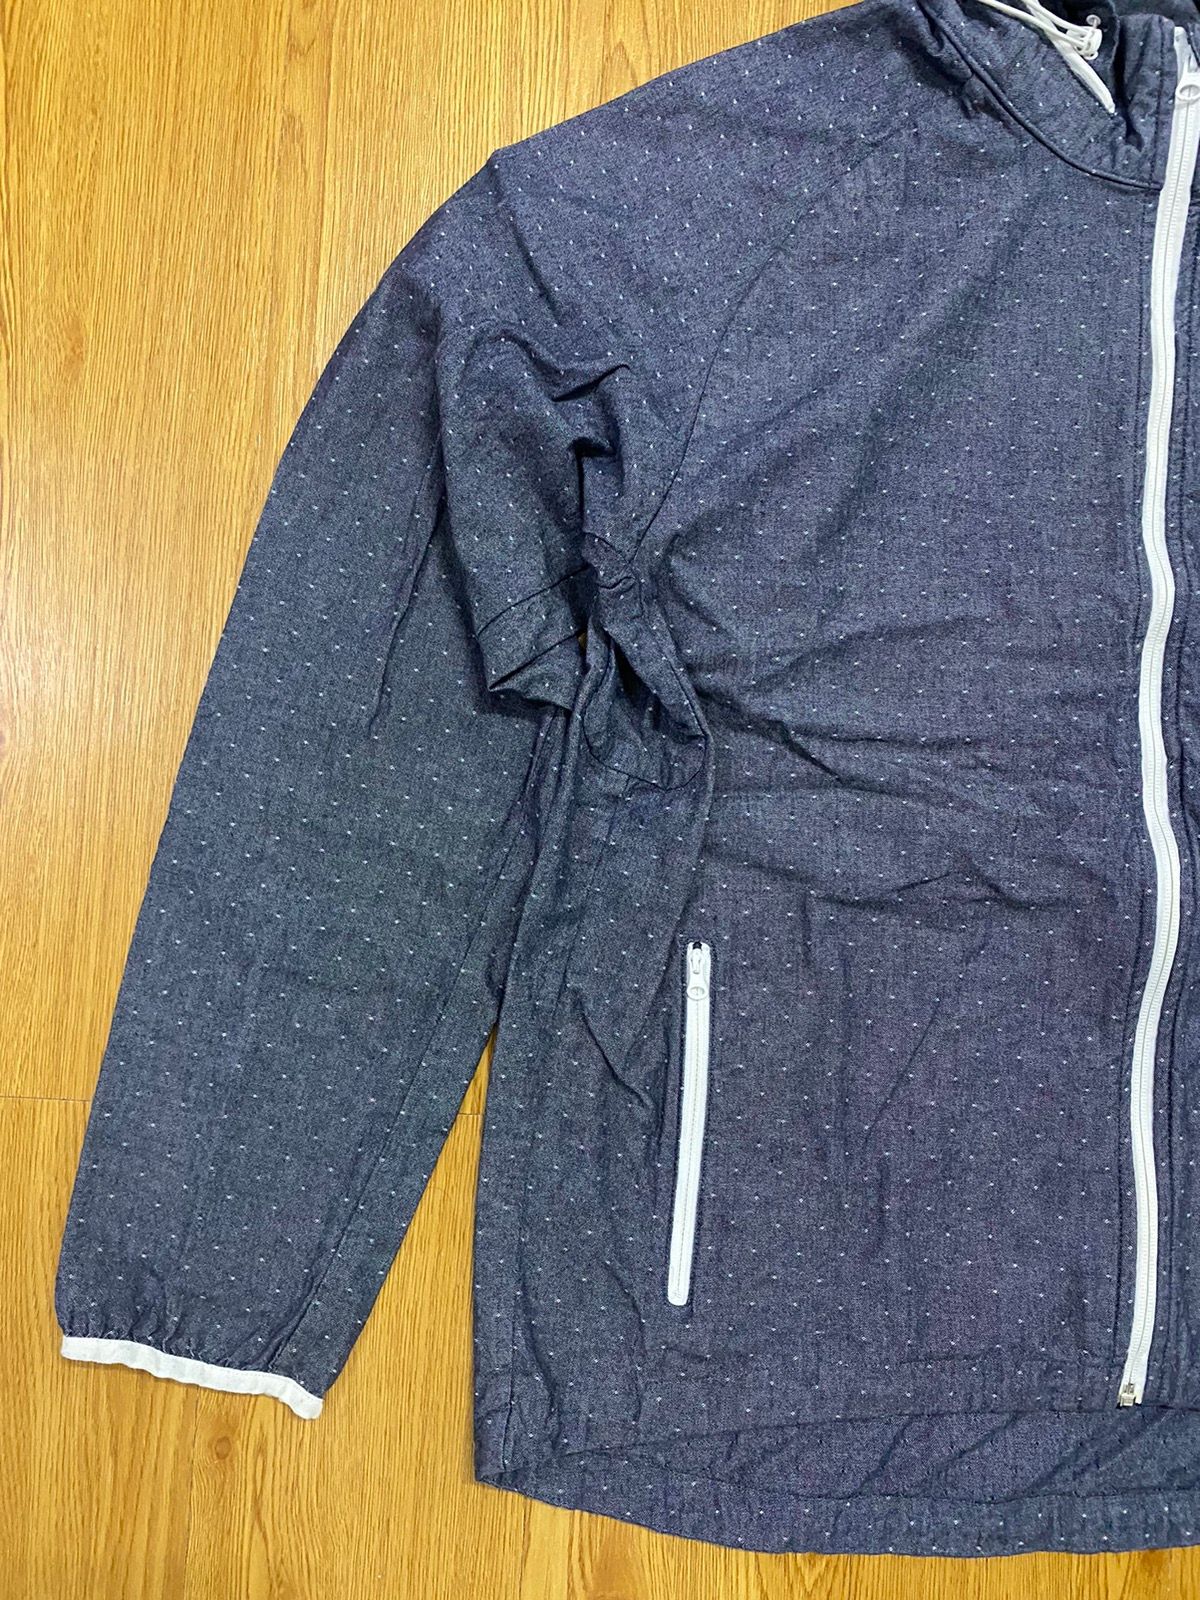 Nike Nike hoodie jacket Size US XL / EU 56 / 4 - 3 Thumbnail